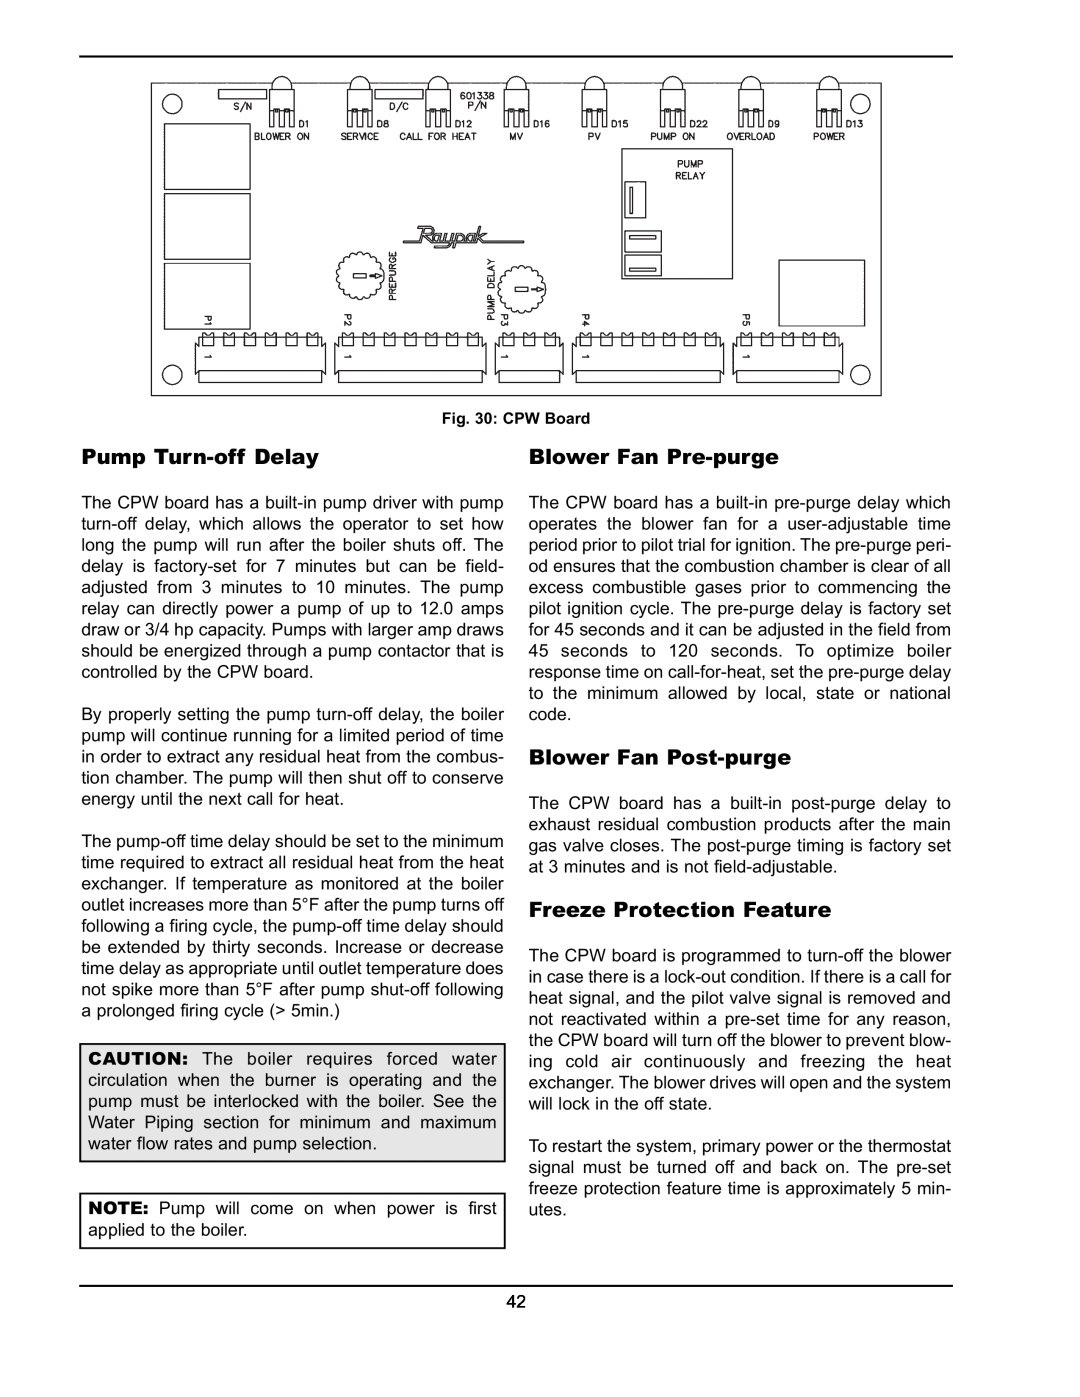 Raypak 751 manual Pump Turn-offDelay, Blower Fan Pre-purge, Blower Fan Post-purge, Freeze Protection Feature 